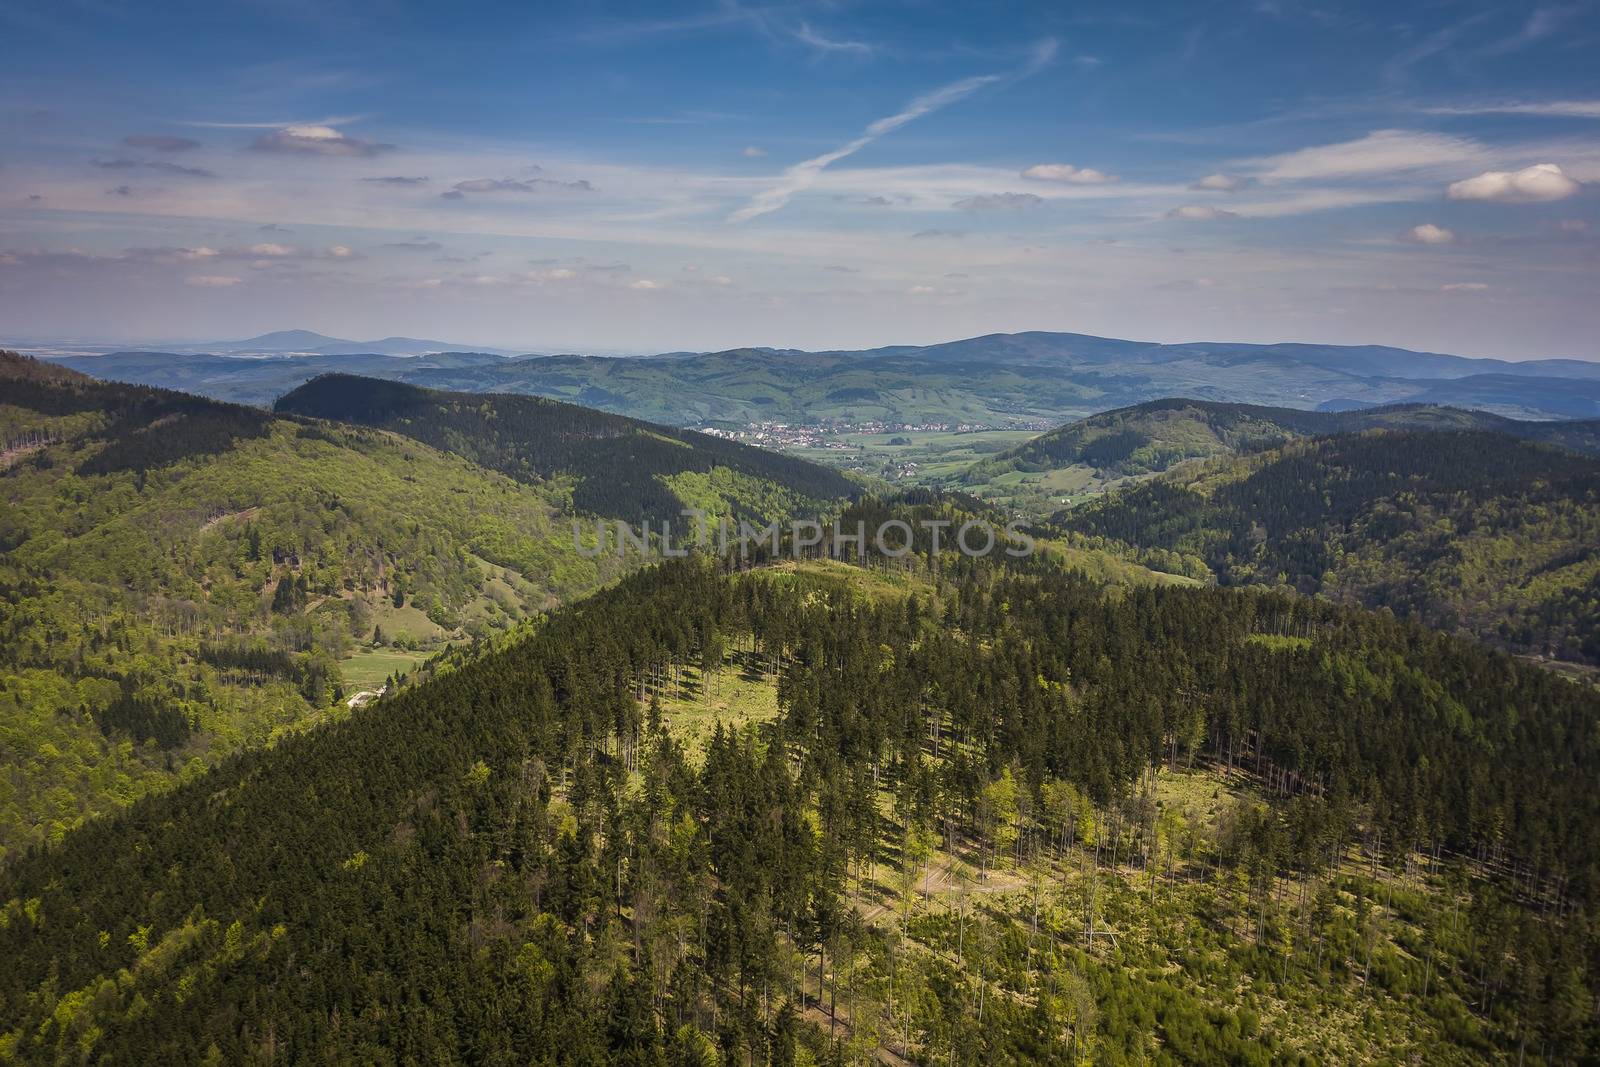 Granicznik Mountain in Sudetes by furzyk73